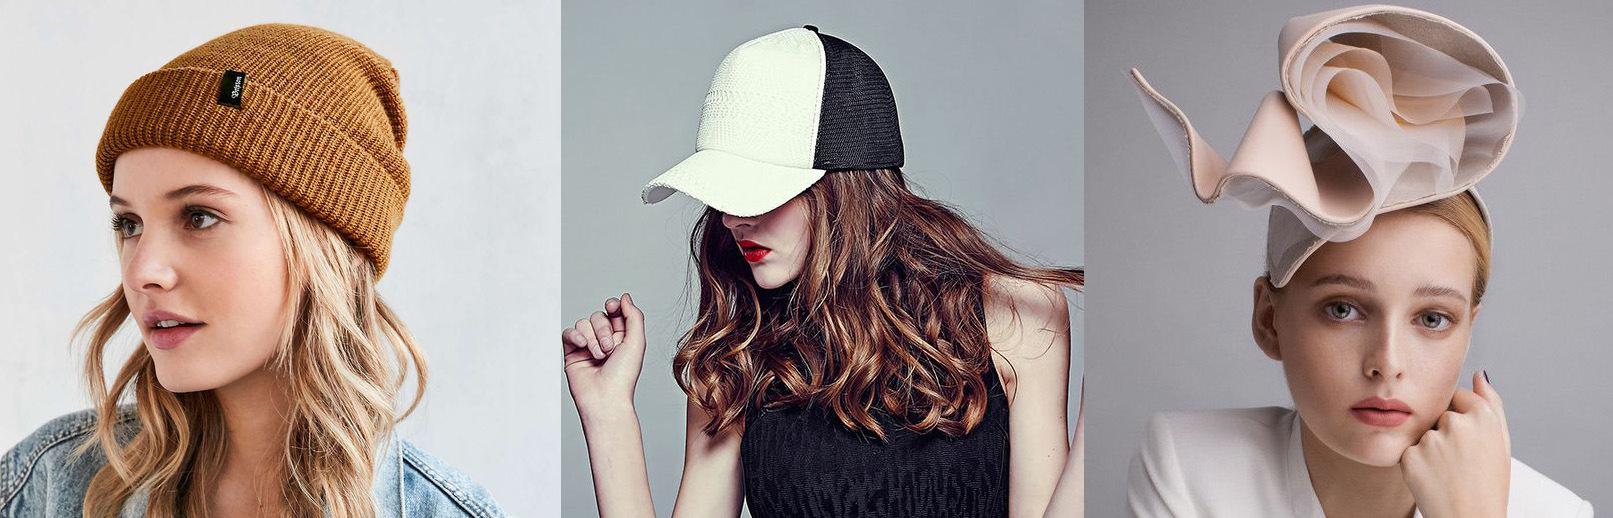 outfit grid womens hats beanie baseball cap fascinator